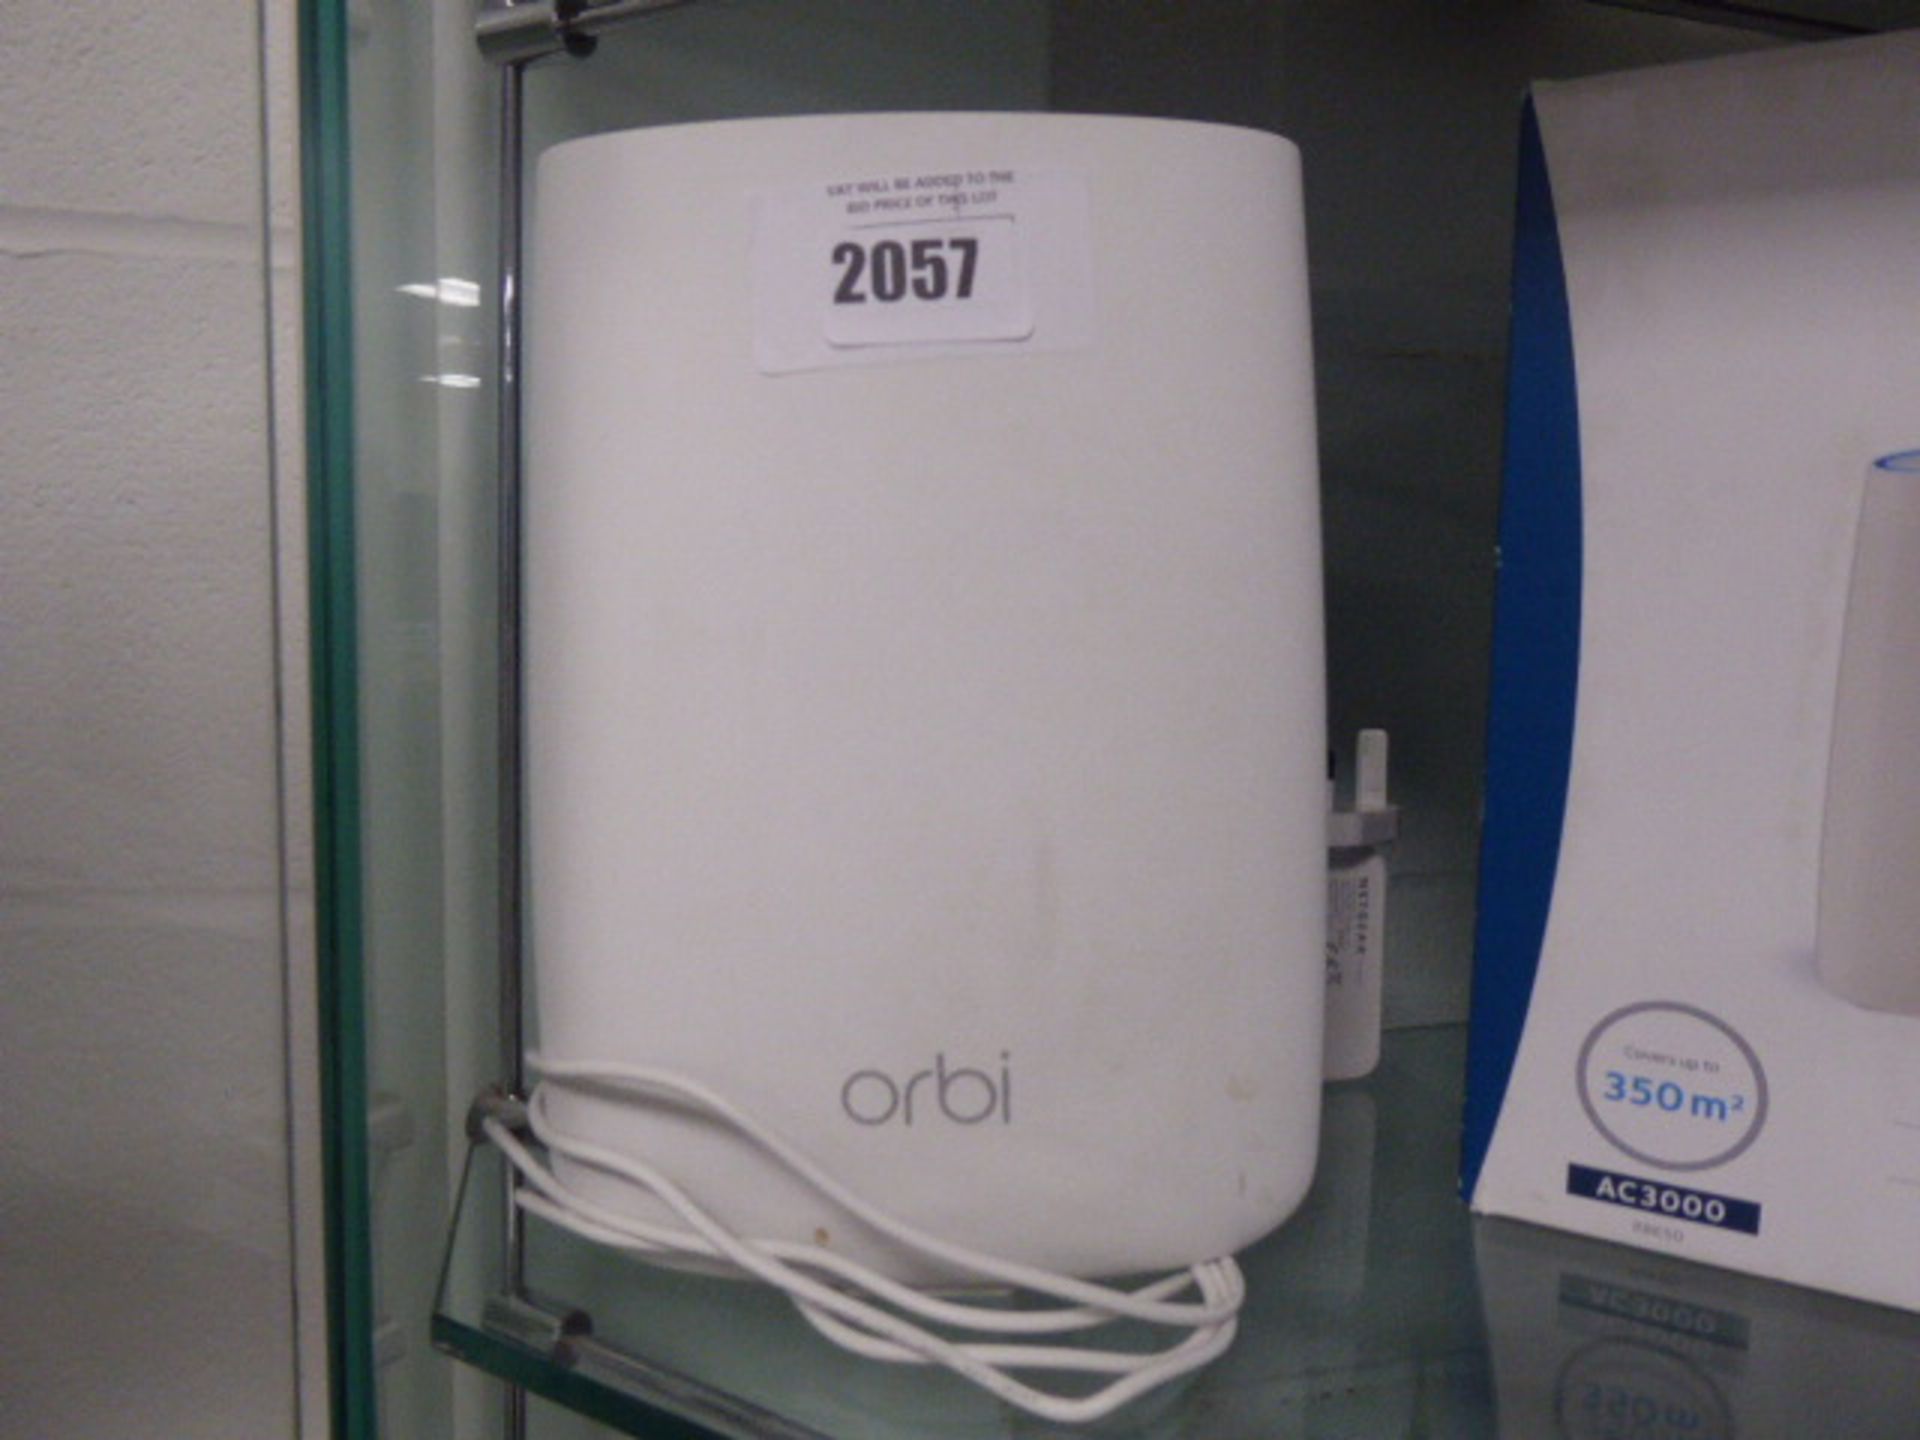 Netgear Orbi router model no. RBR50